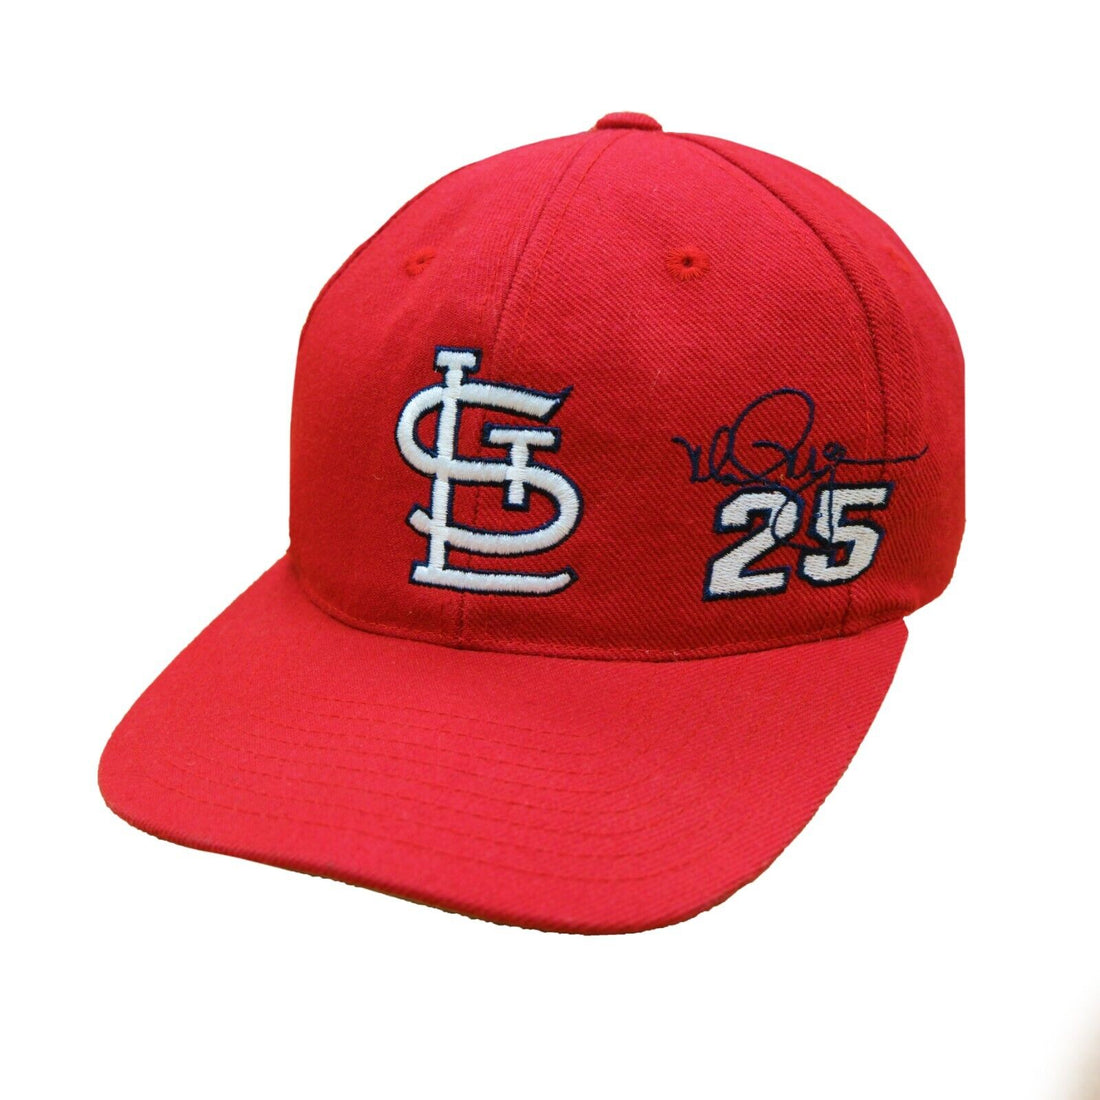 Vintage St. Louis Cardinals Mark McGwire Twins Enterprise Snapback Hat OSFA MLB